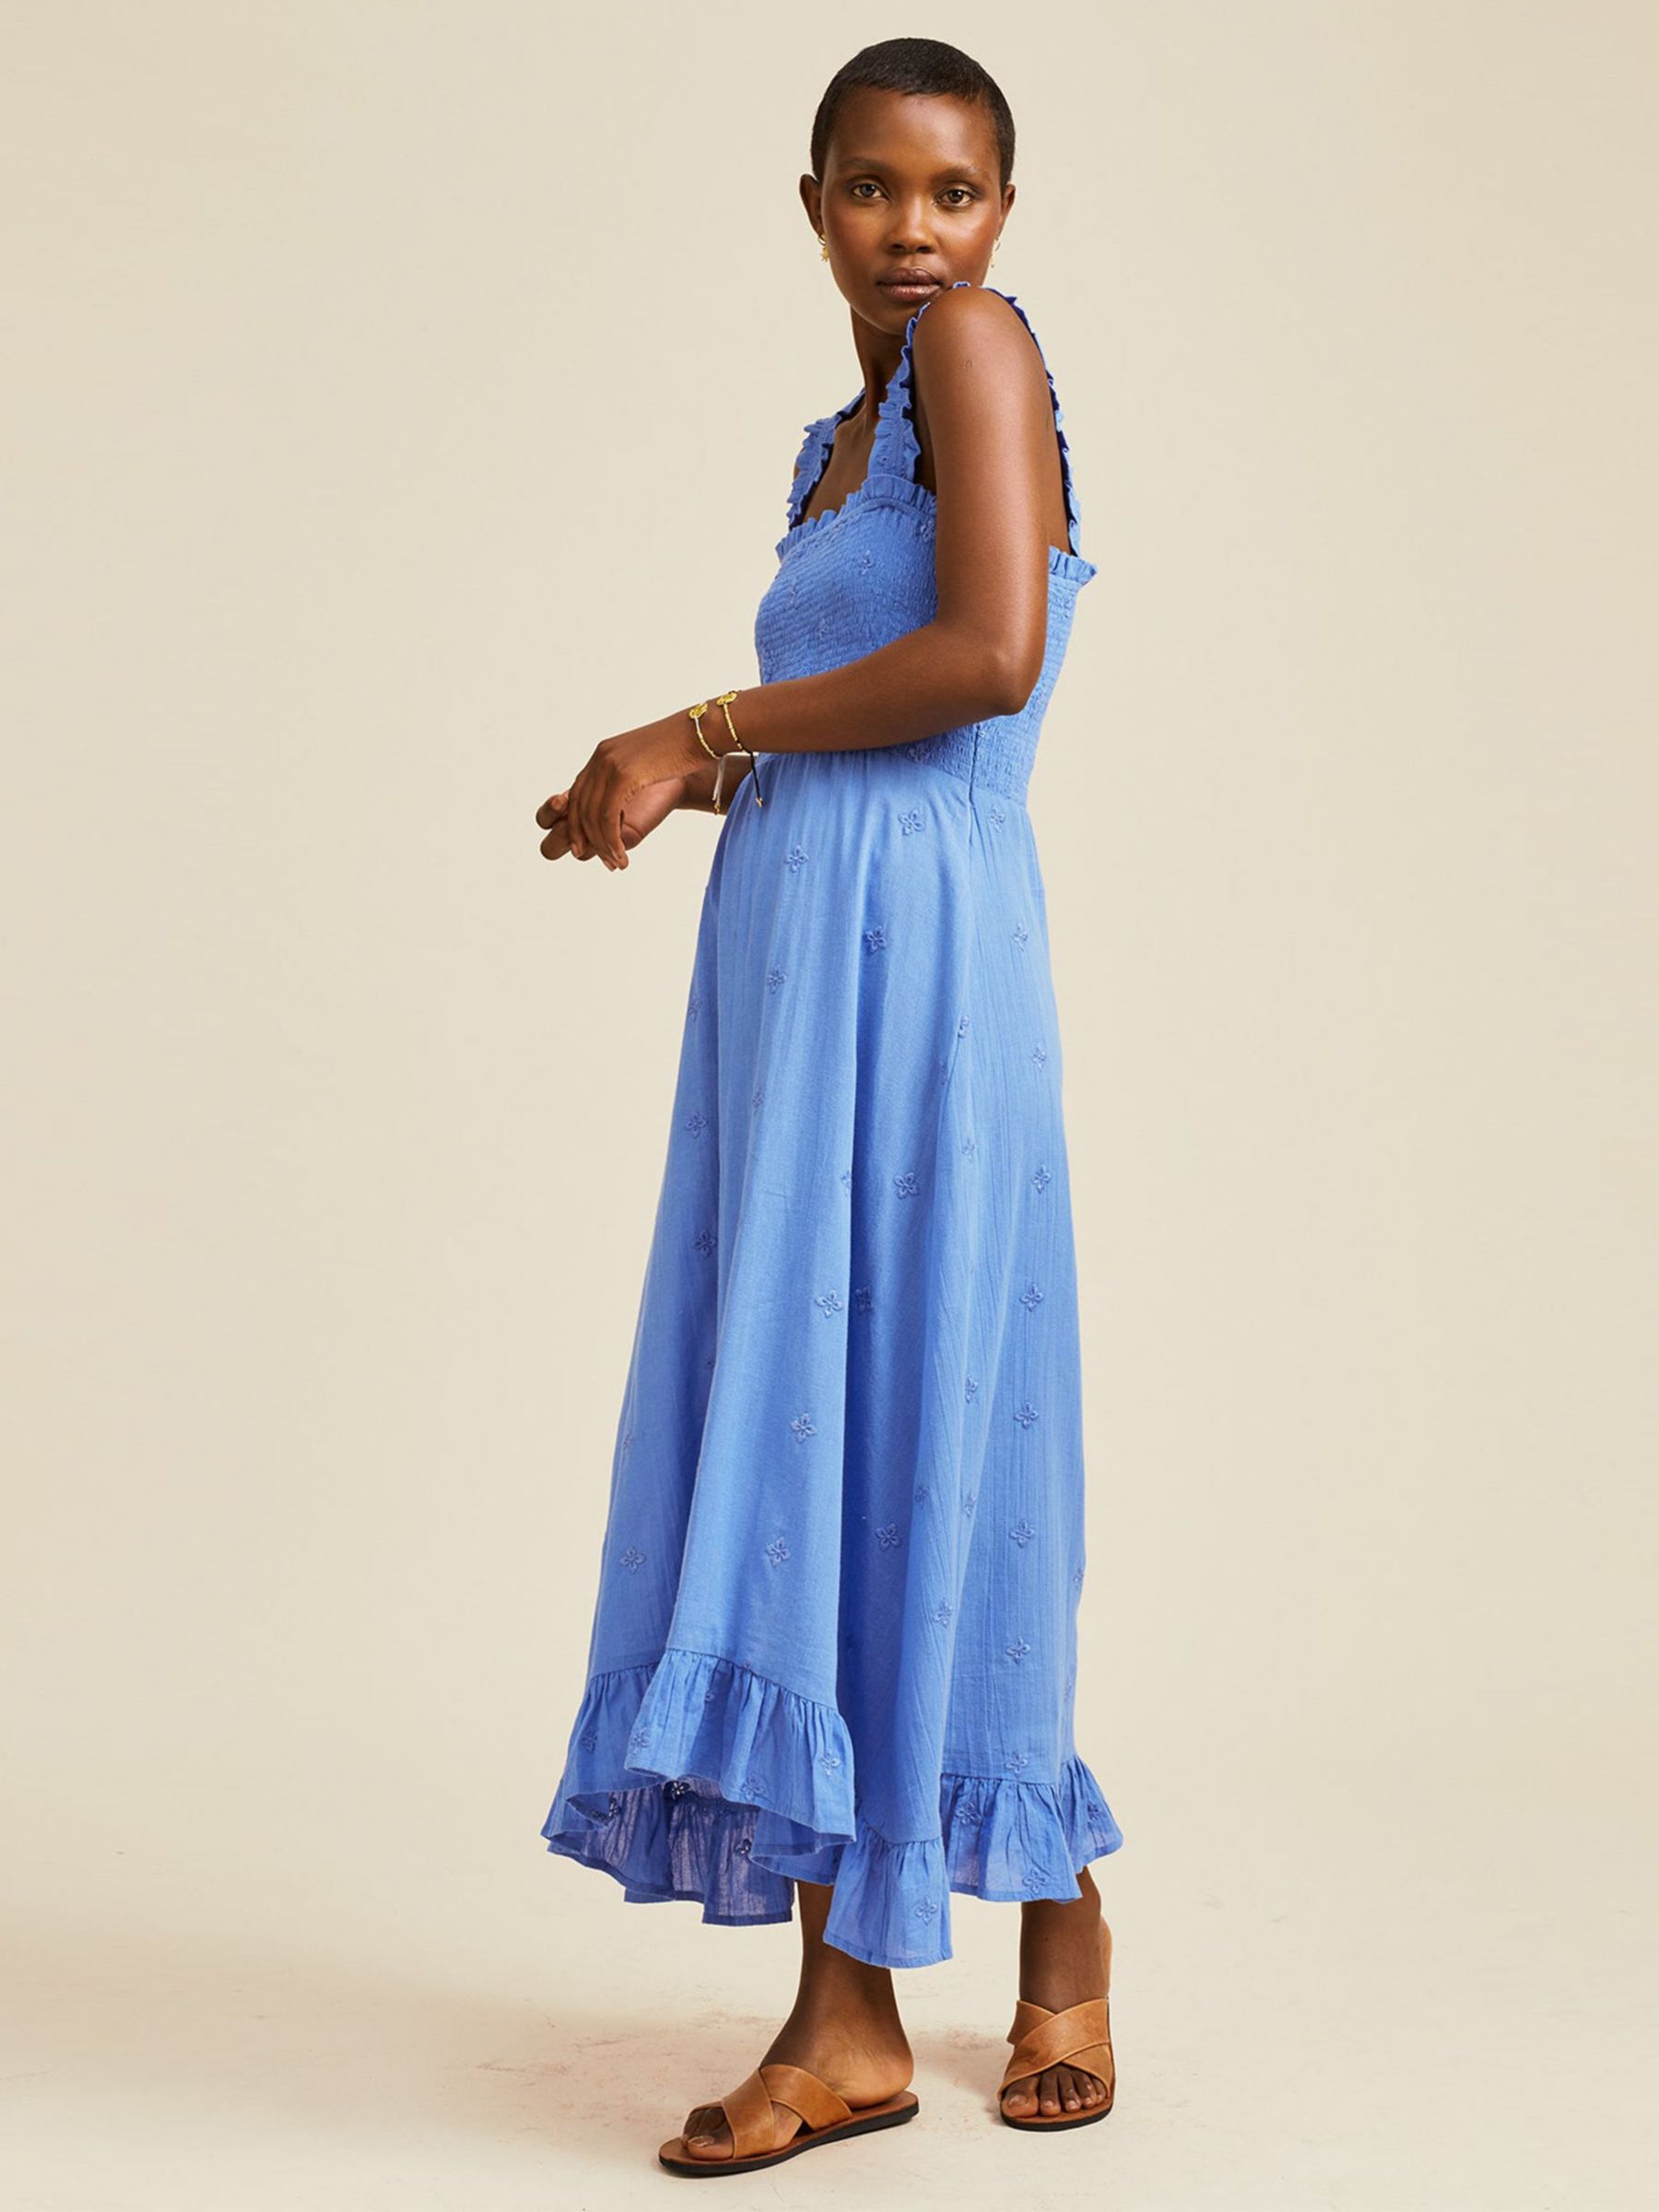 Aspiga Rhianna Cotton Embroidered Sleeveless Midi Dress, Marina Blue, XS